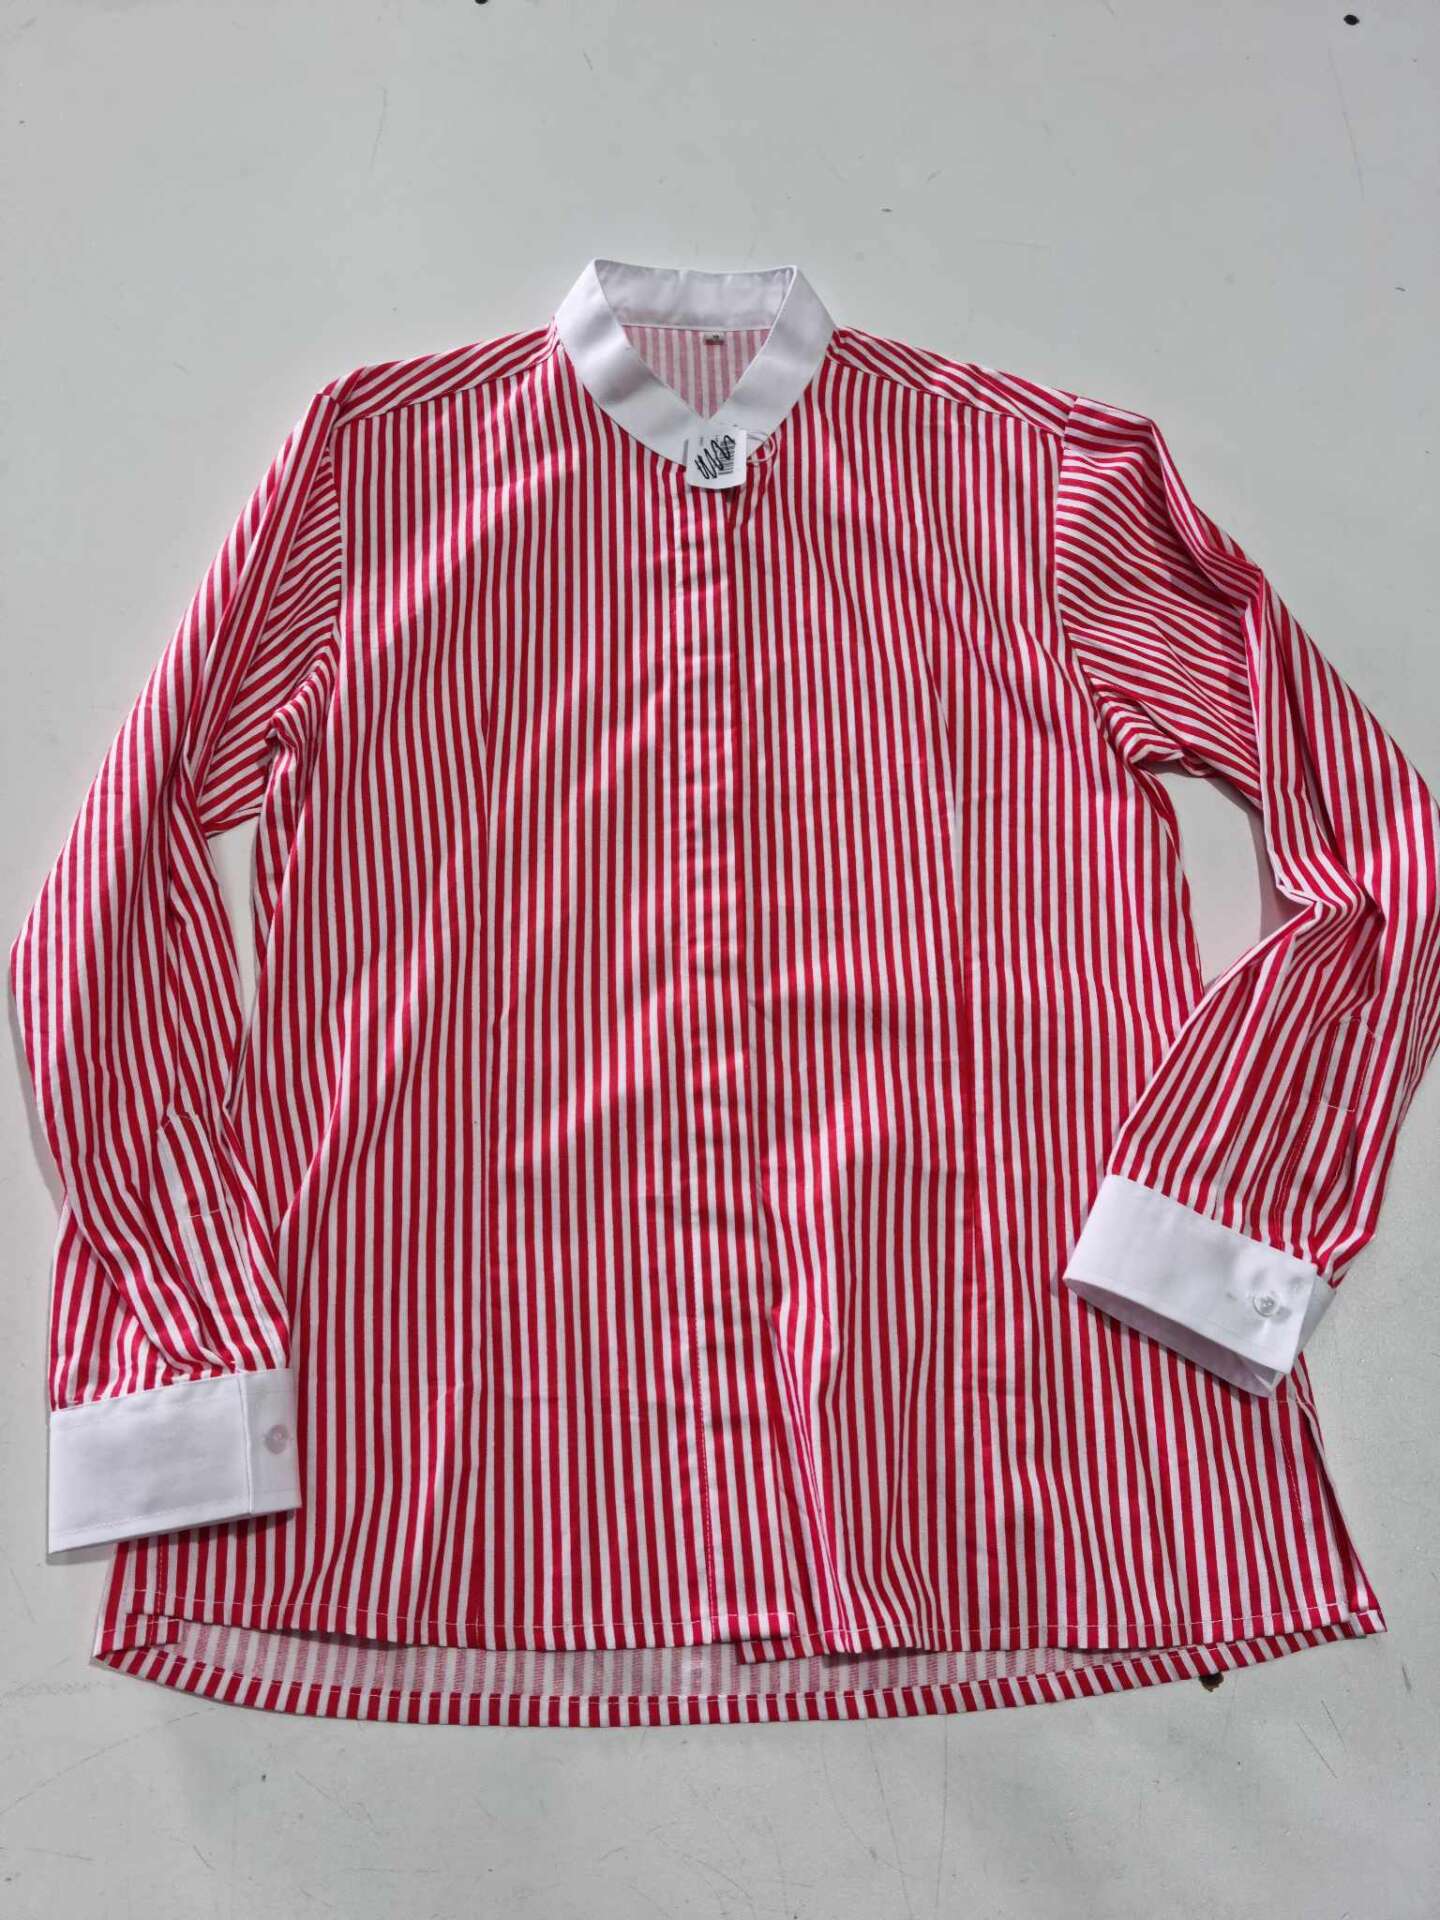 Red Stripe Stock Collar Show Shirt – Ladies Size 14/16